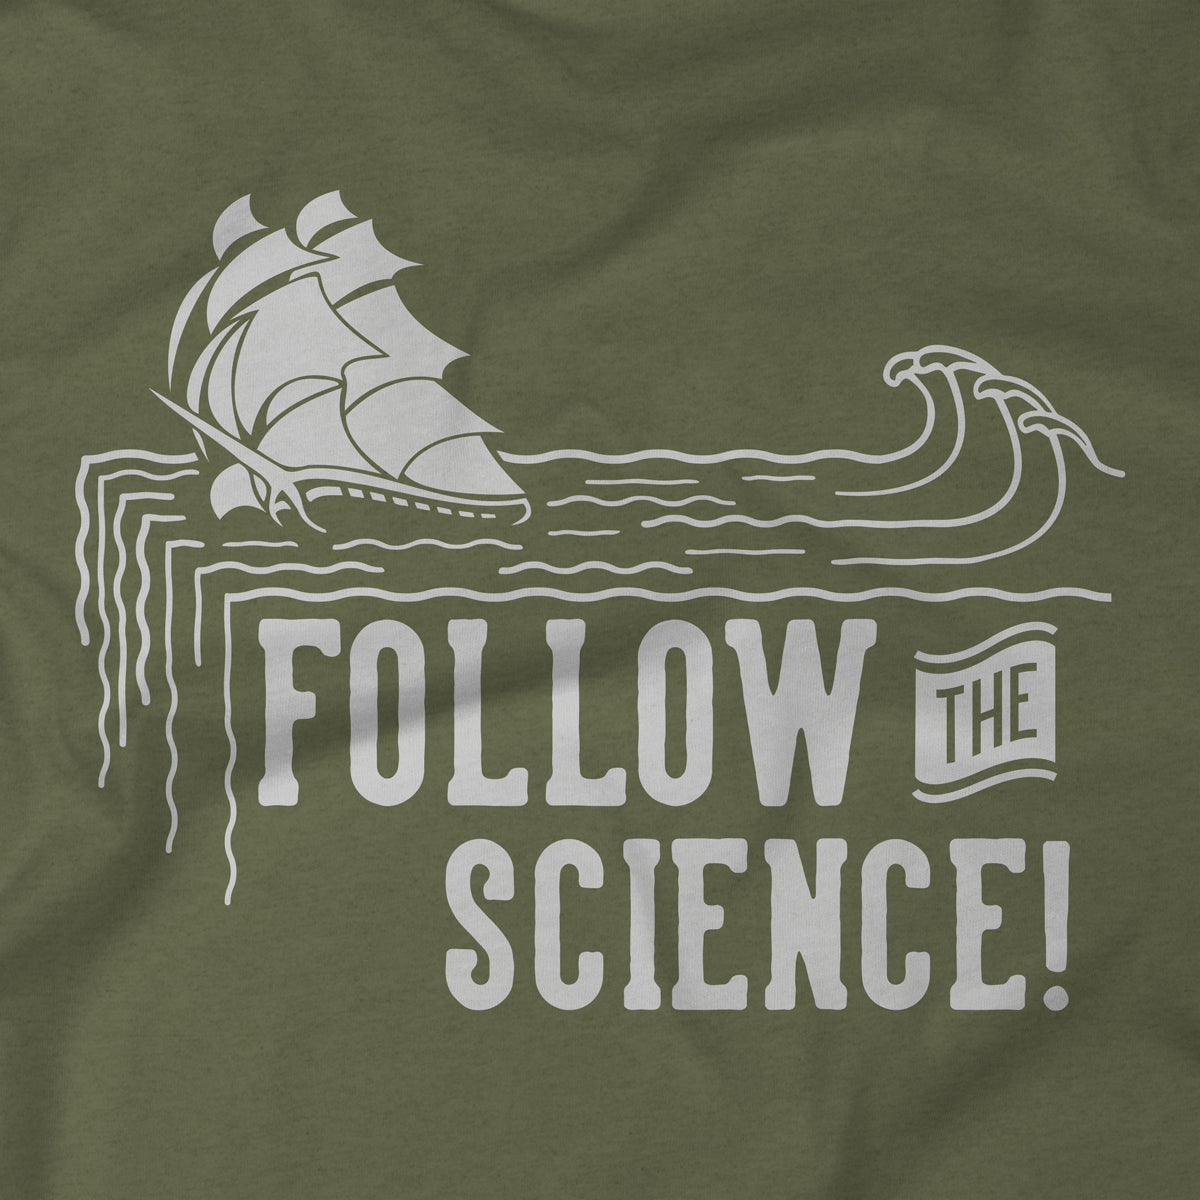 Follow The Science T-Shirt